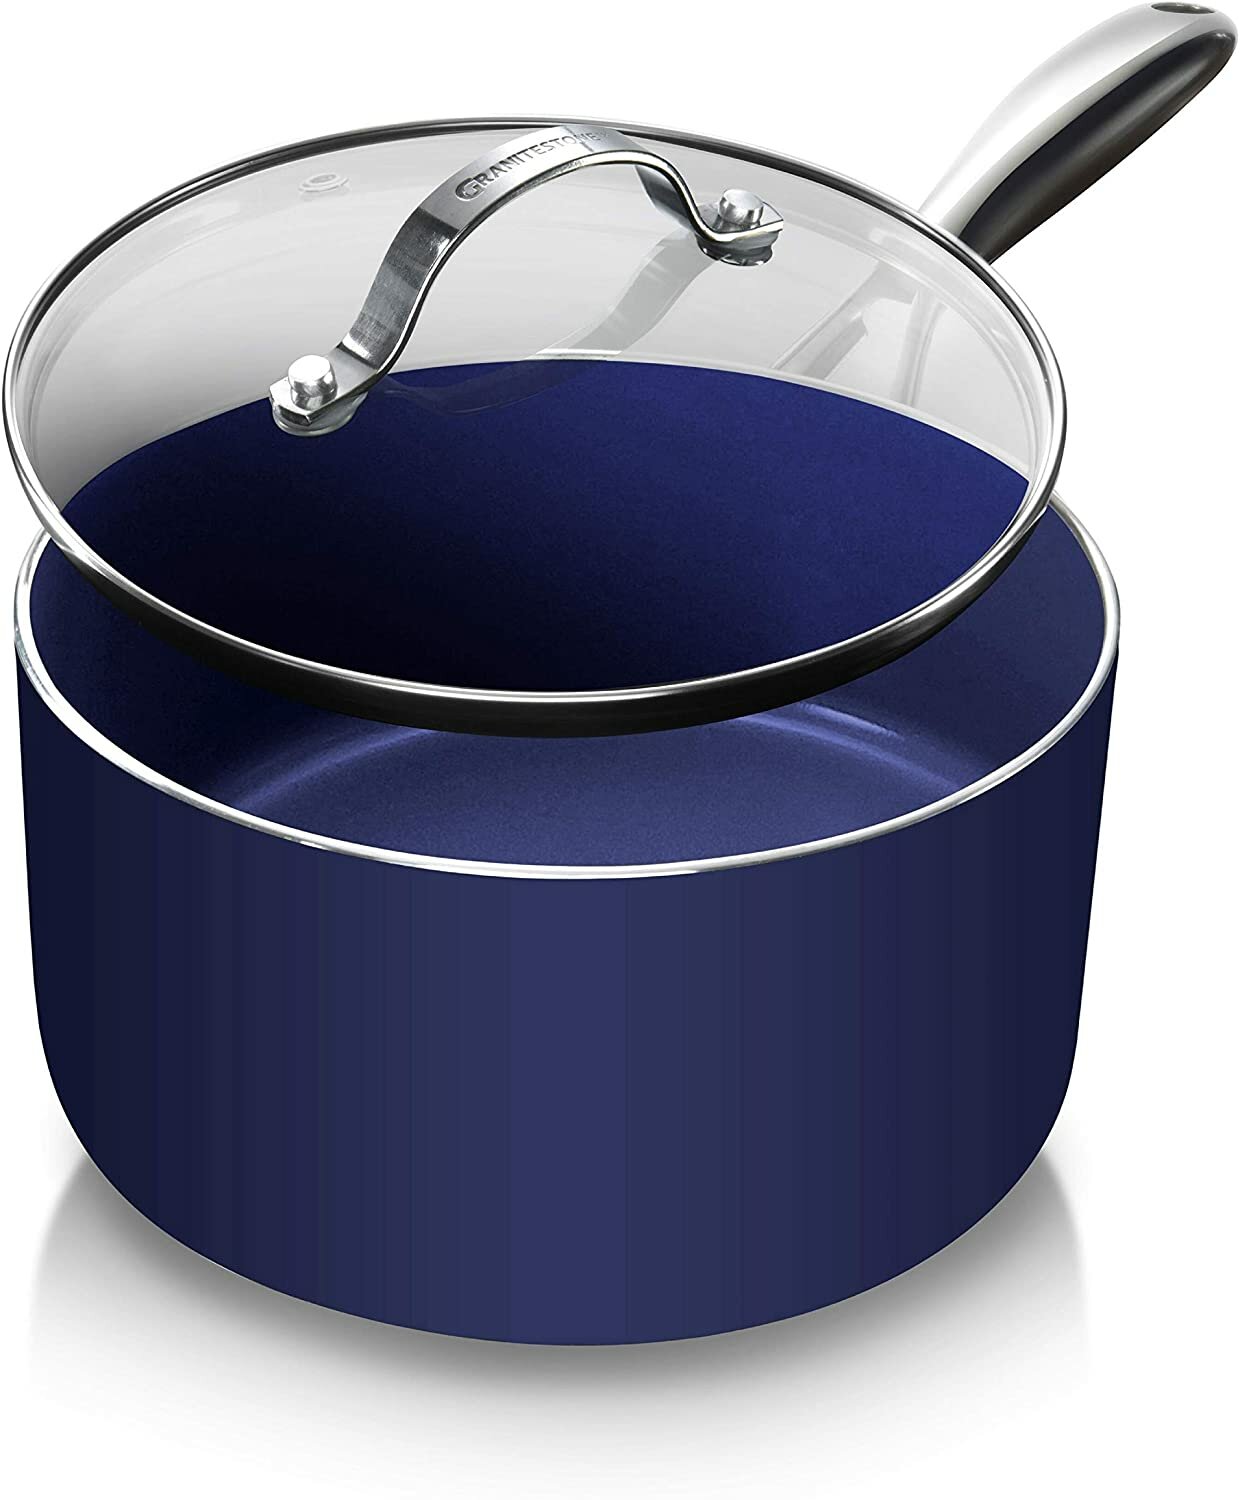 Granitestone Blue 2.5 QT Nonstick Sauce Pan with Tempered Glass